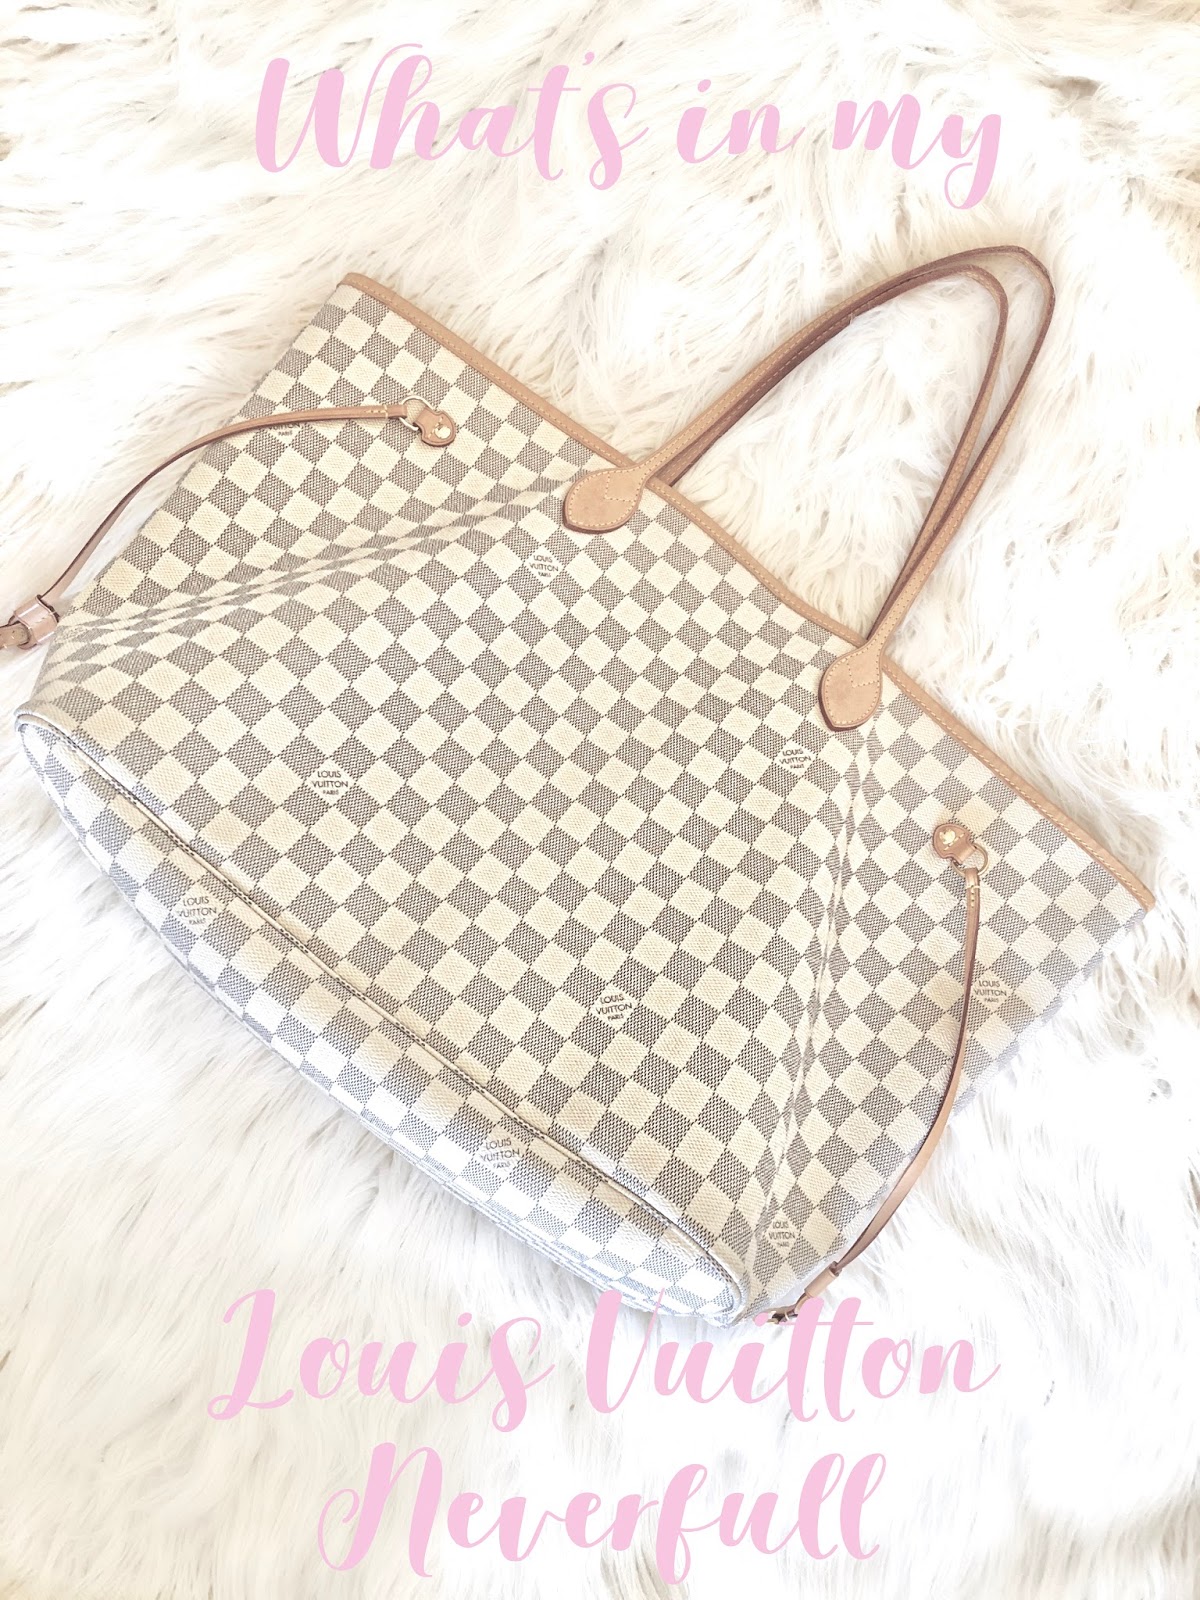 Louis Vuitton, Bags, Blonde Fringe Louis Vuitton Neverfull Tote